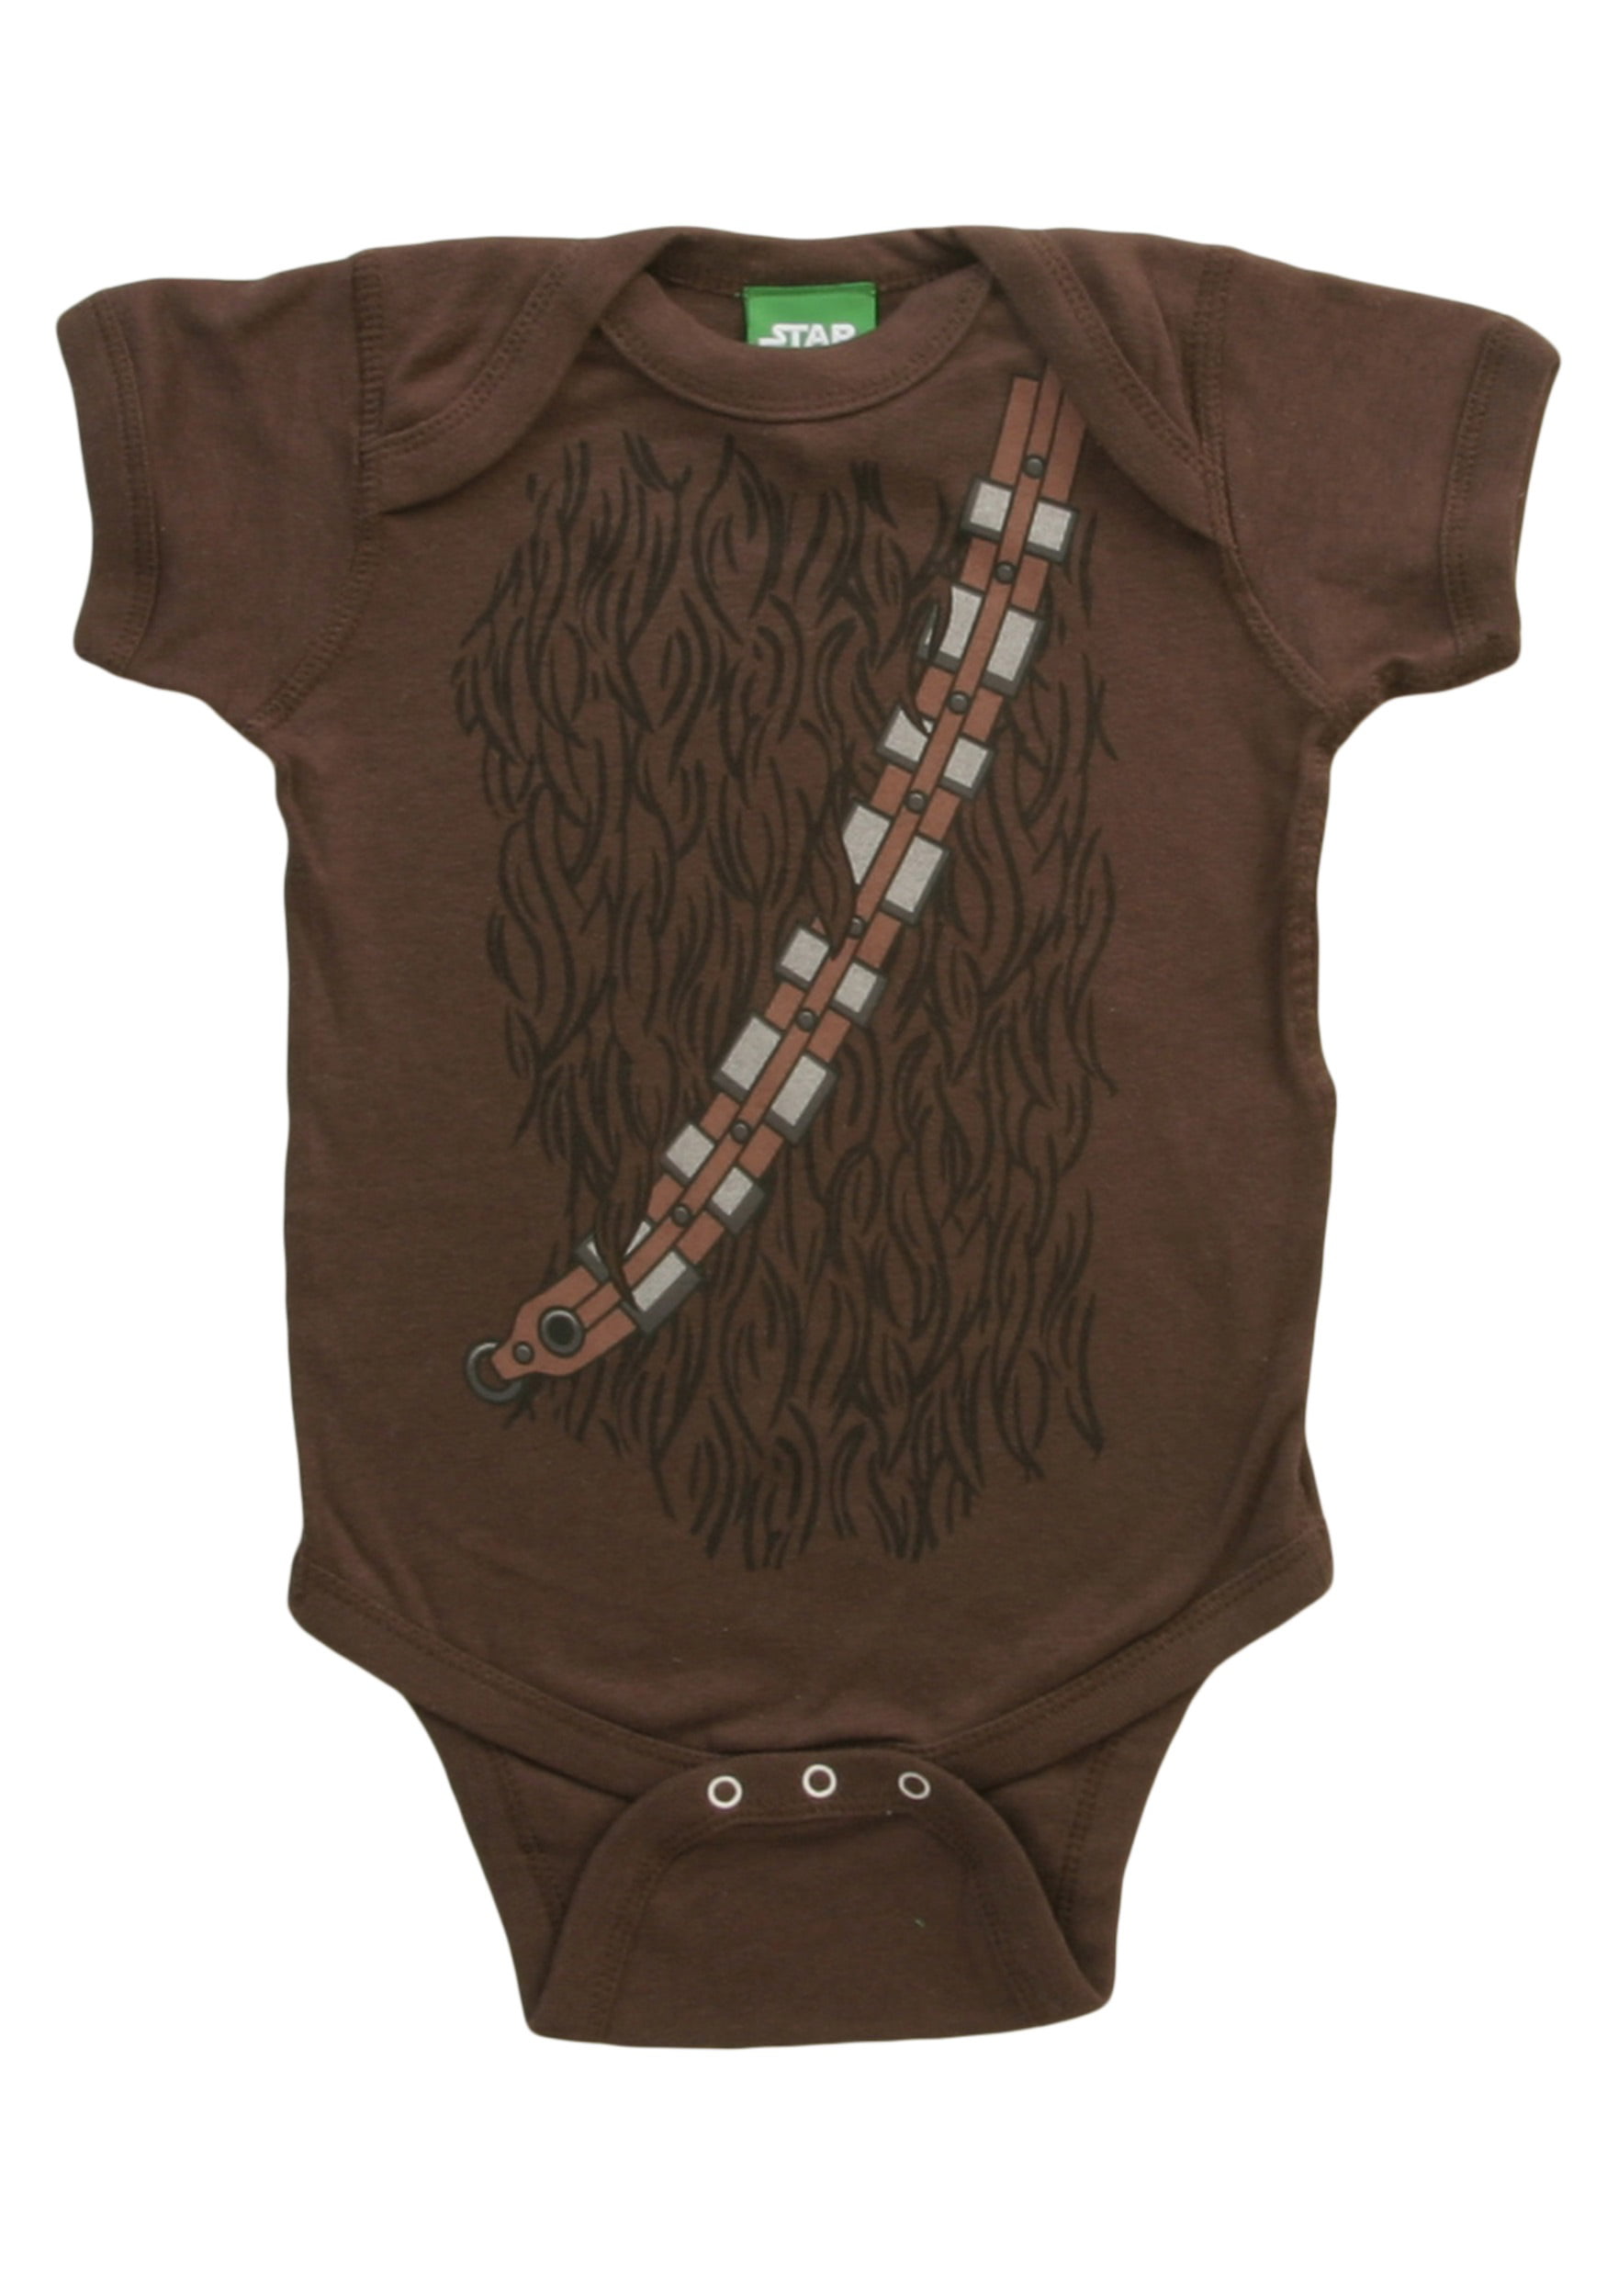 Star Wars W is for Wookie Infant Onesie